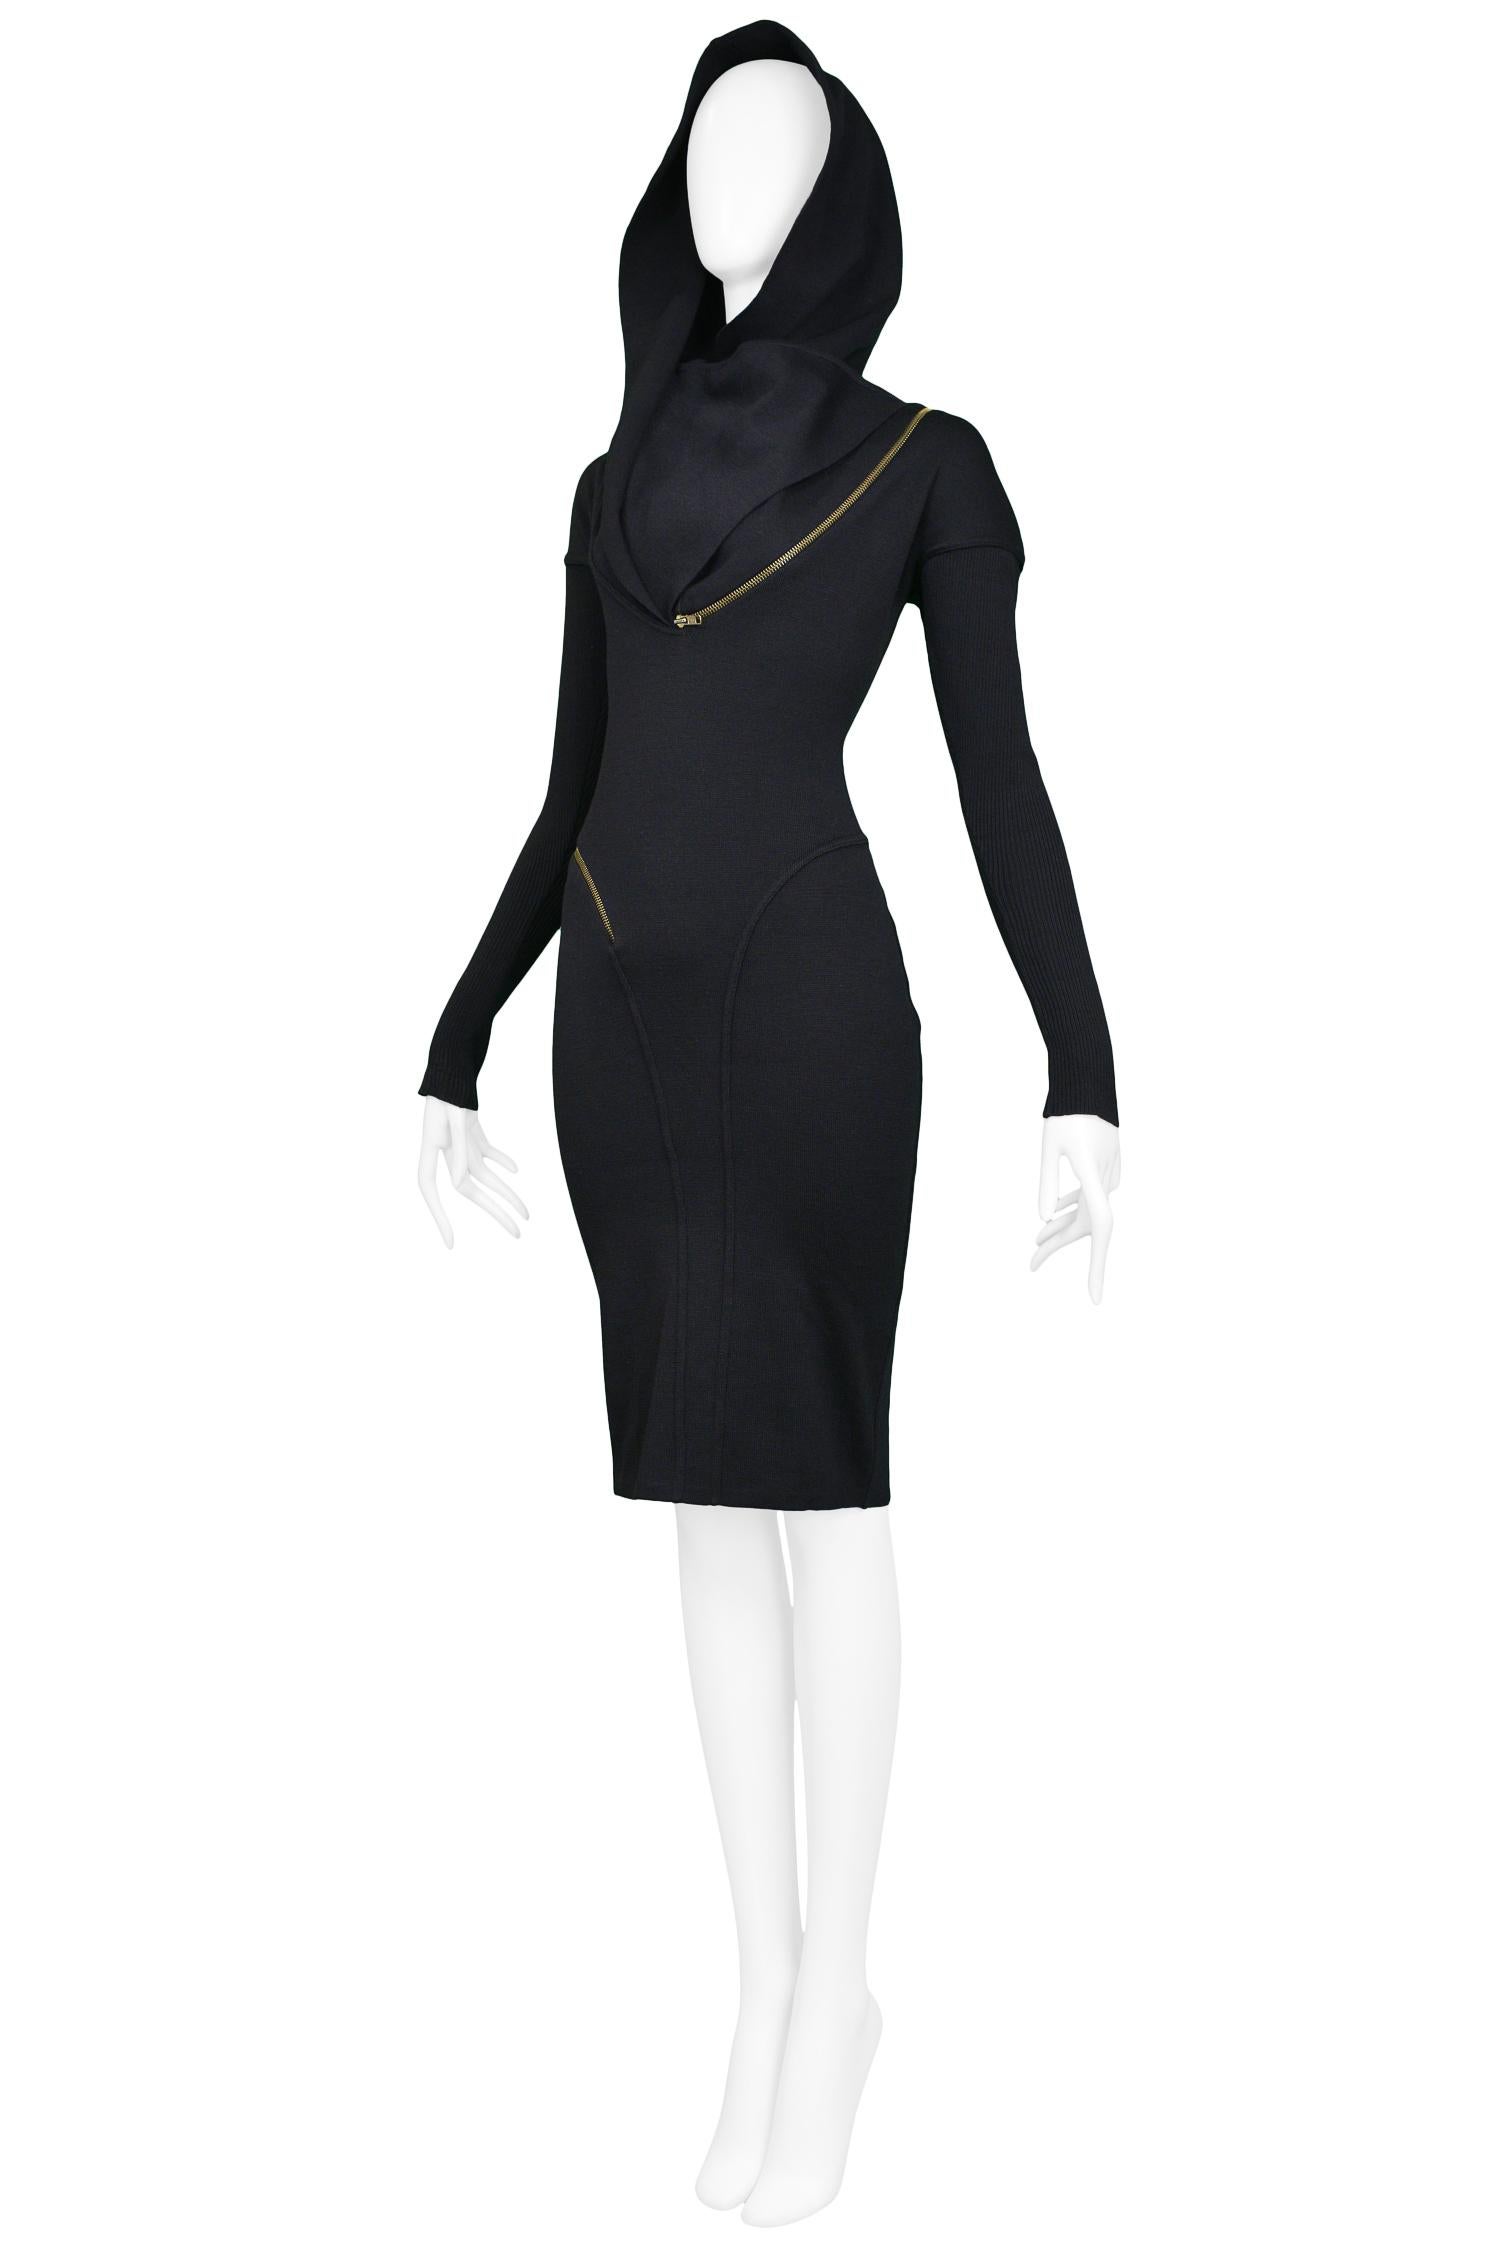 Women's or Men's Vintage Alaia Iconic Black Hooded Zipper Dress 1986